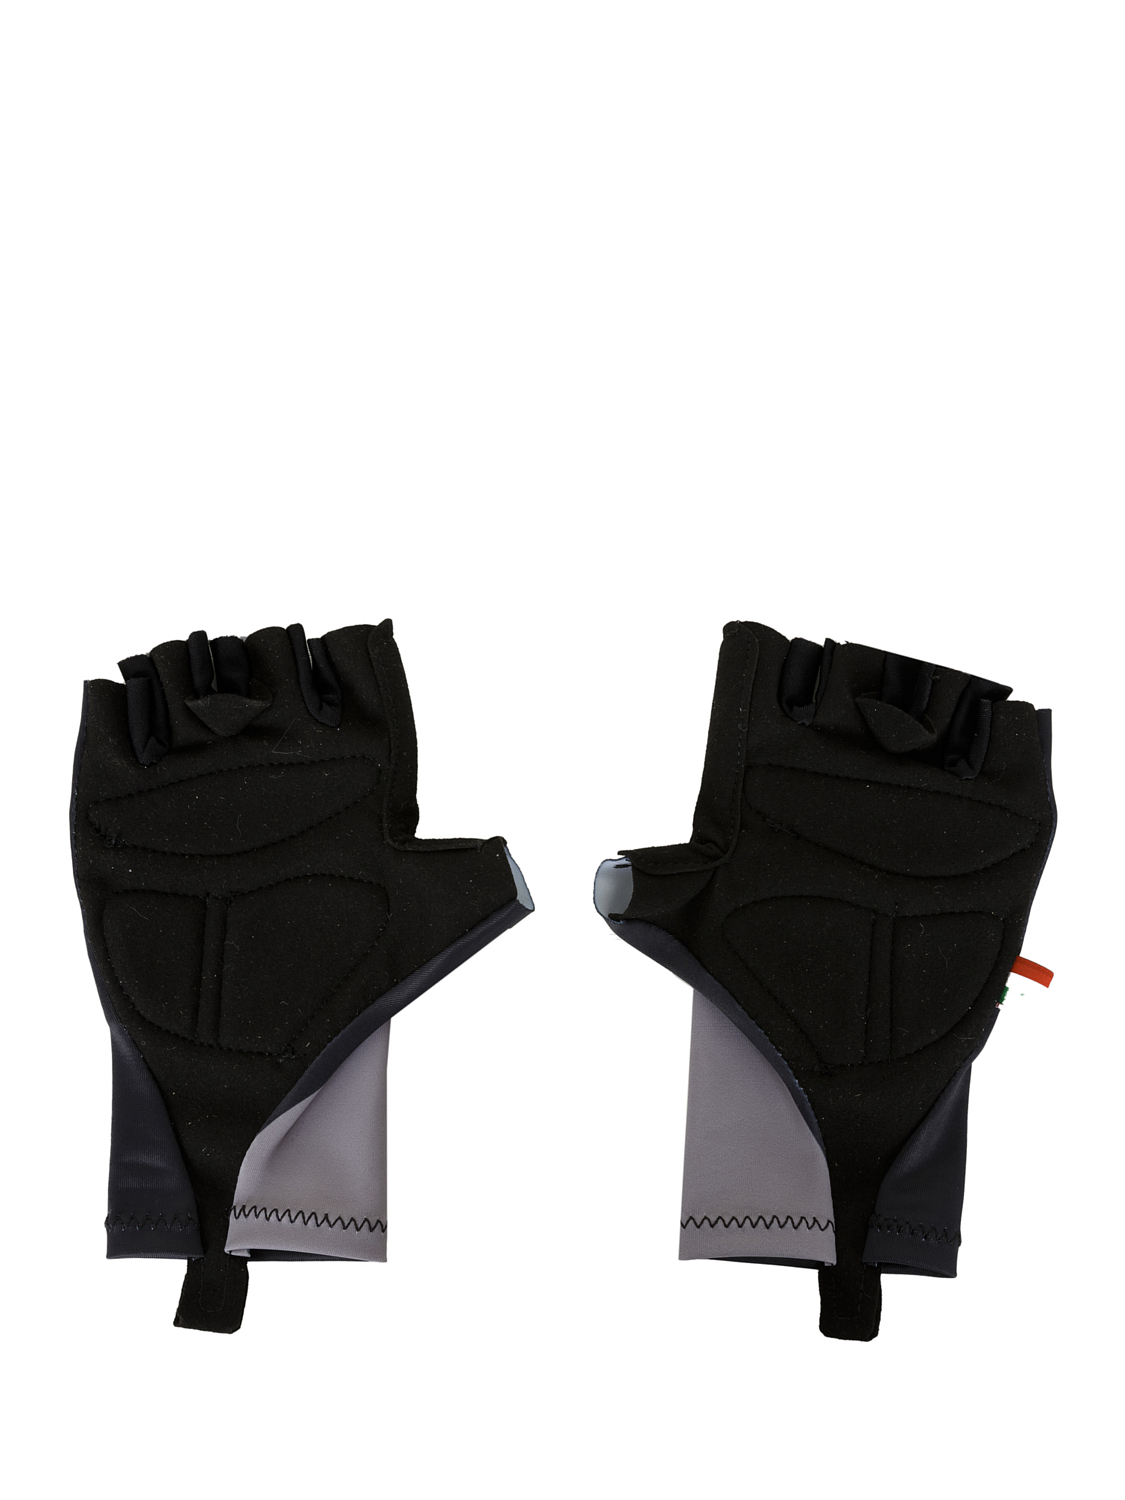 Перчатки велосипедные Accapi Fingerless Cycling Gloves JR Gray/White